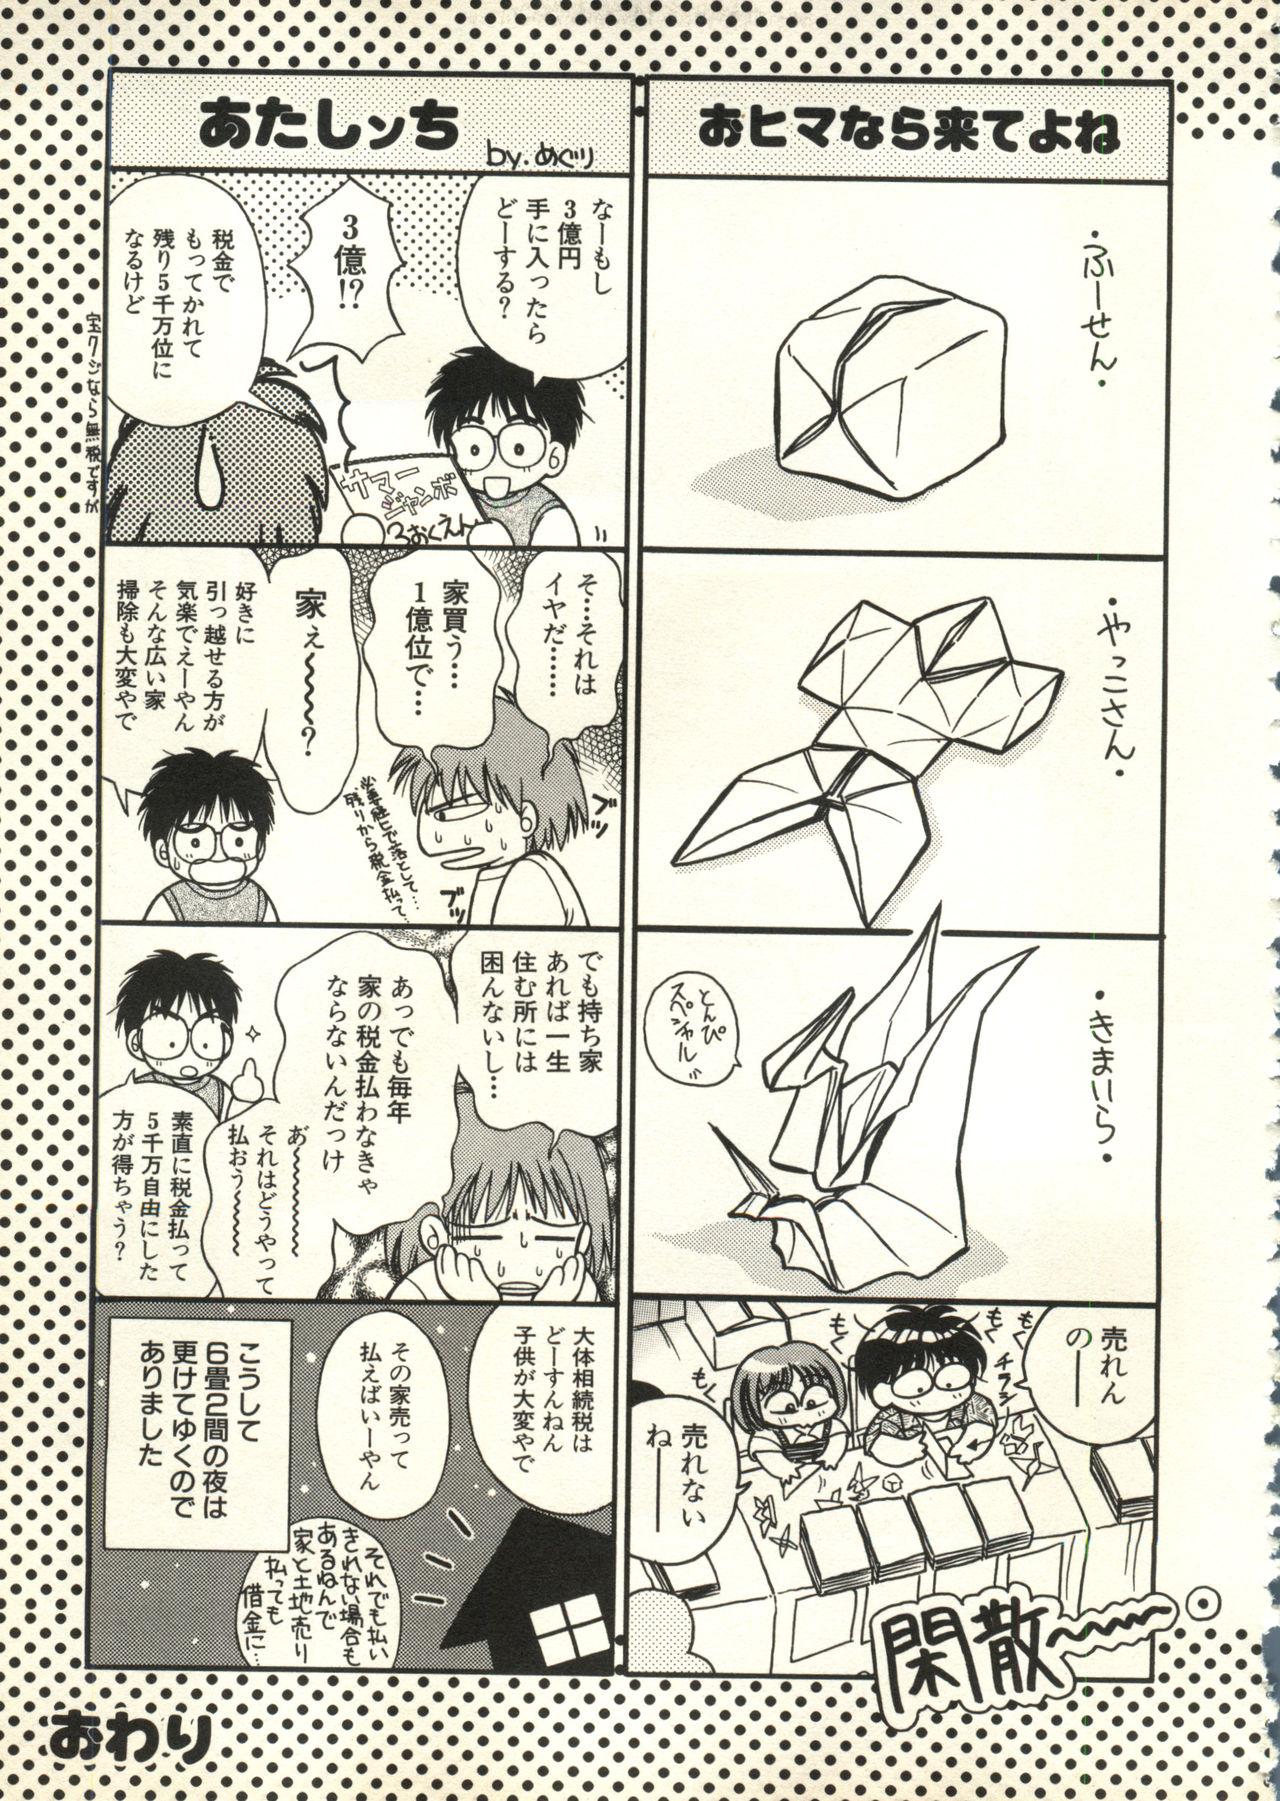 [Anthology] Bishoujo Shoukougun V3 (1) '99 Summer Edition (Various) 165